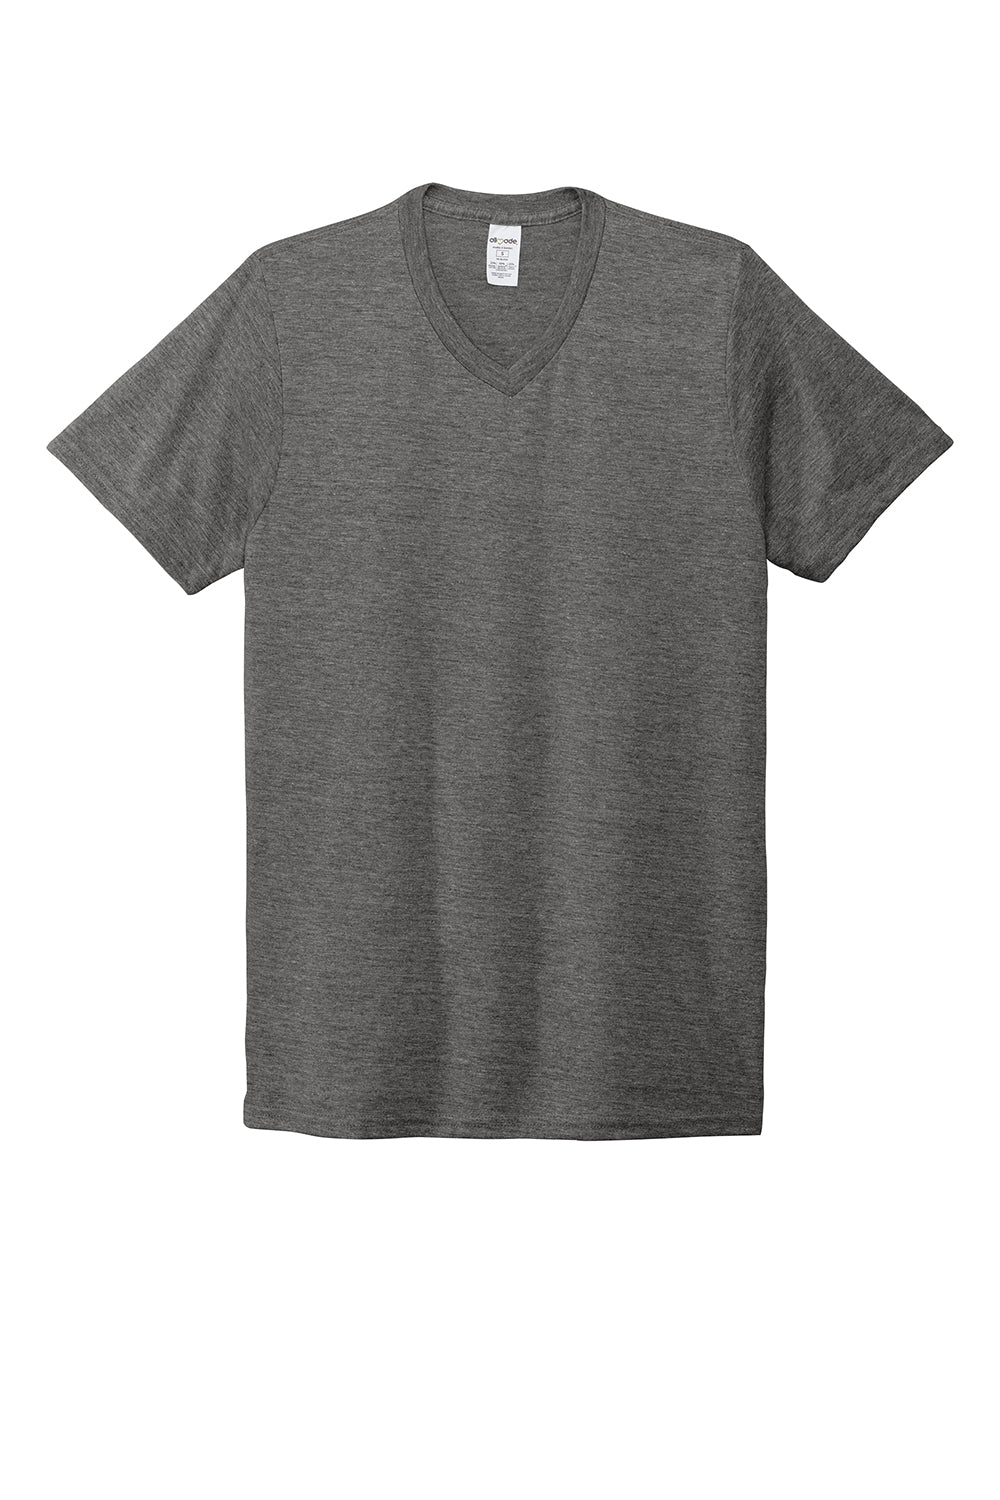 Allmade AL2014 Mens Short Sleeve V-Neck T-Shirt Space Black Flat Front